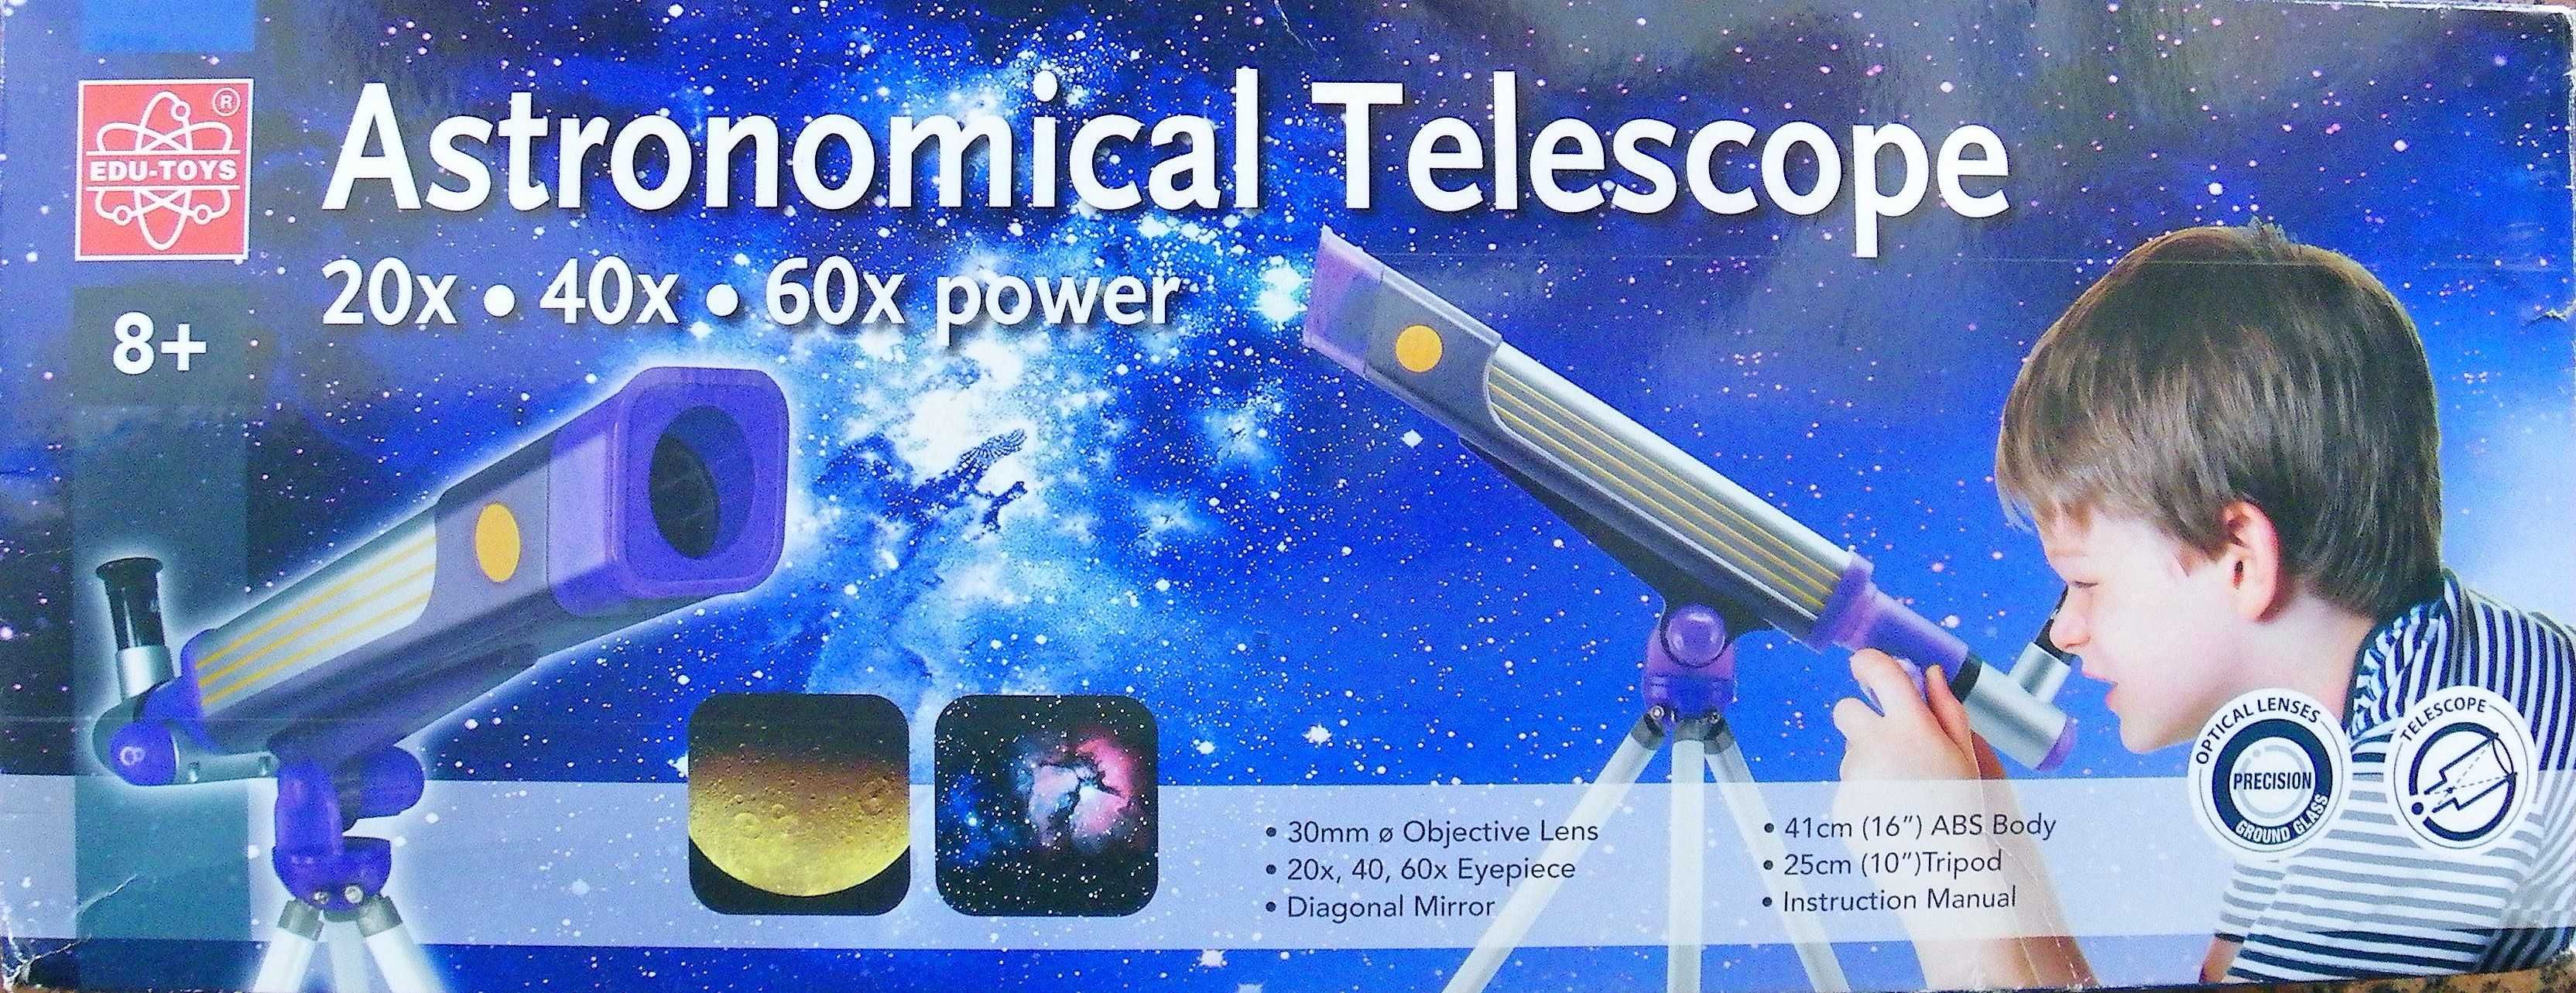 Астрономически телескоп